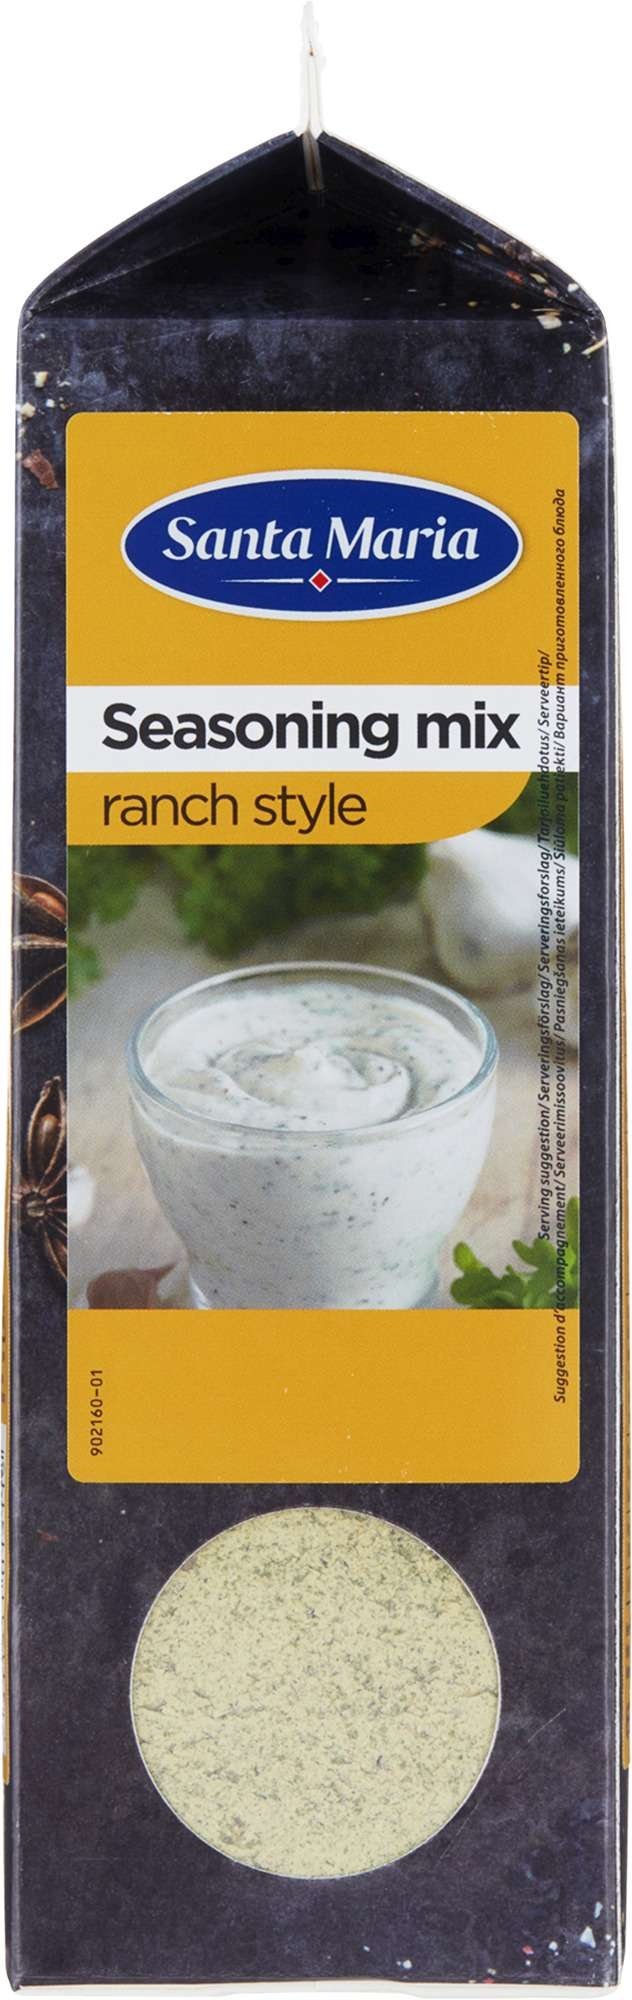 Ranch style season mix   650g